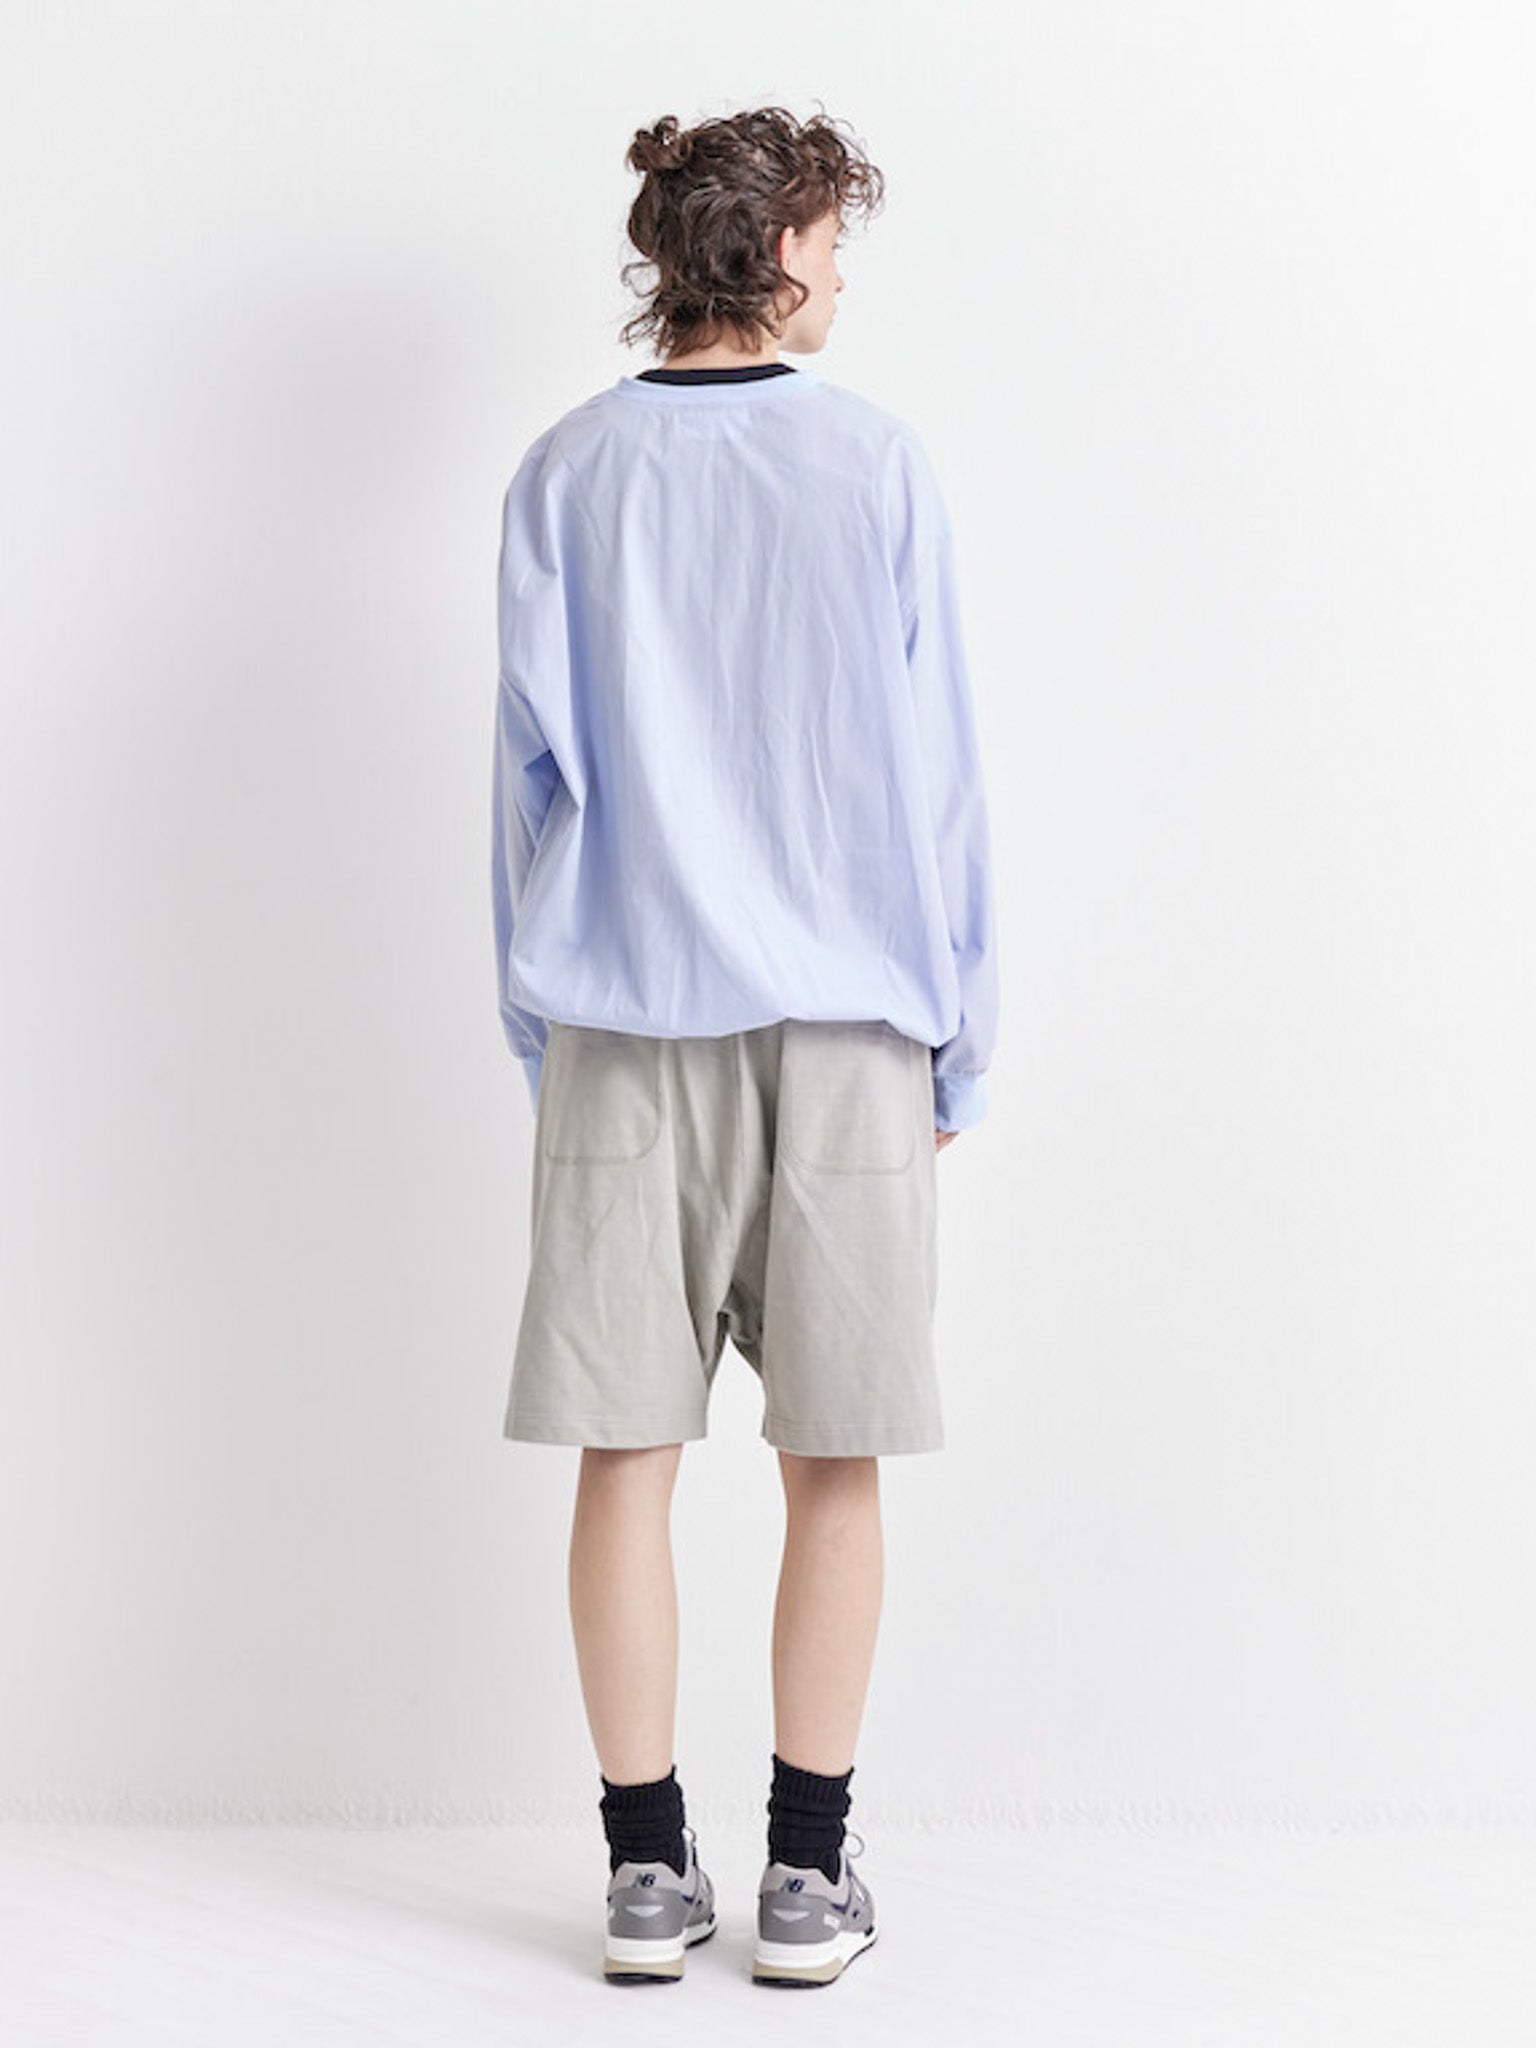 Namu Shop - Veritecoeur Pullover Shirt - Sax